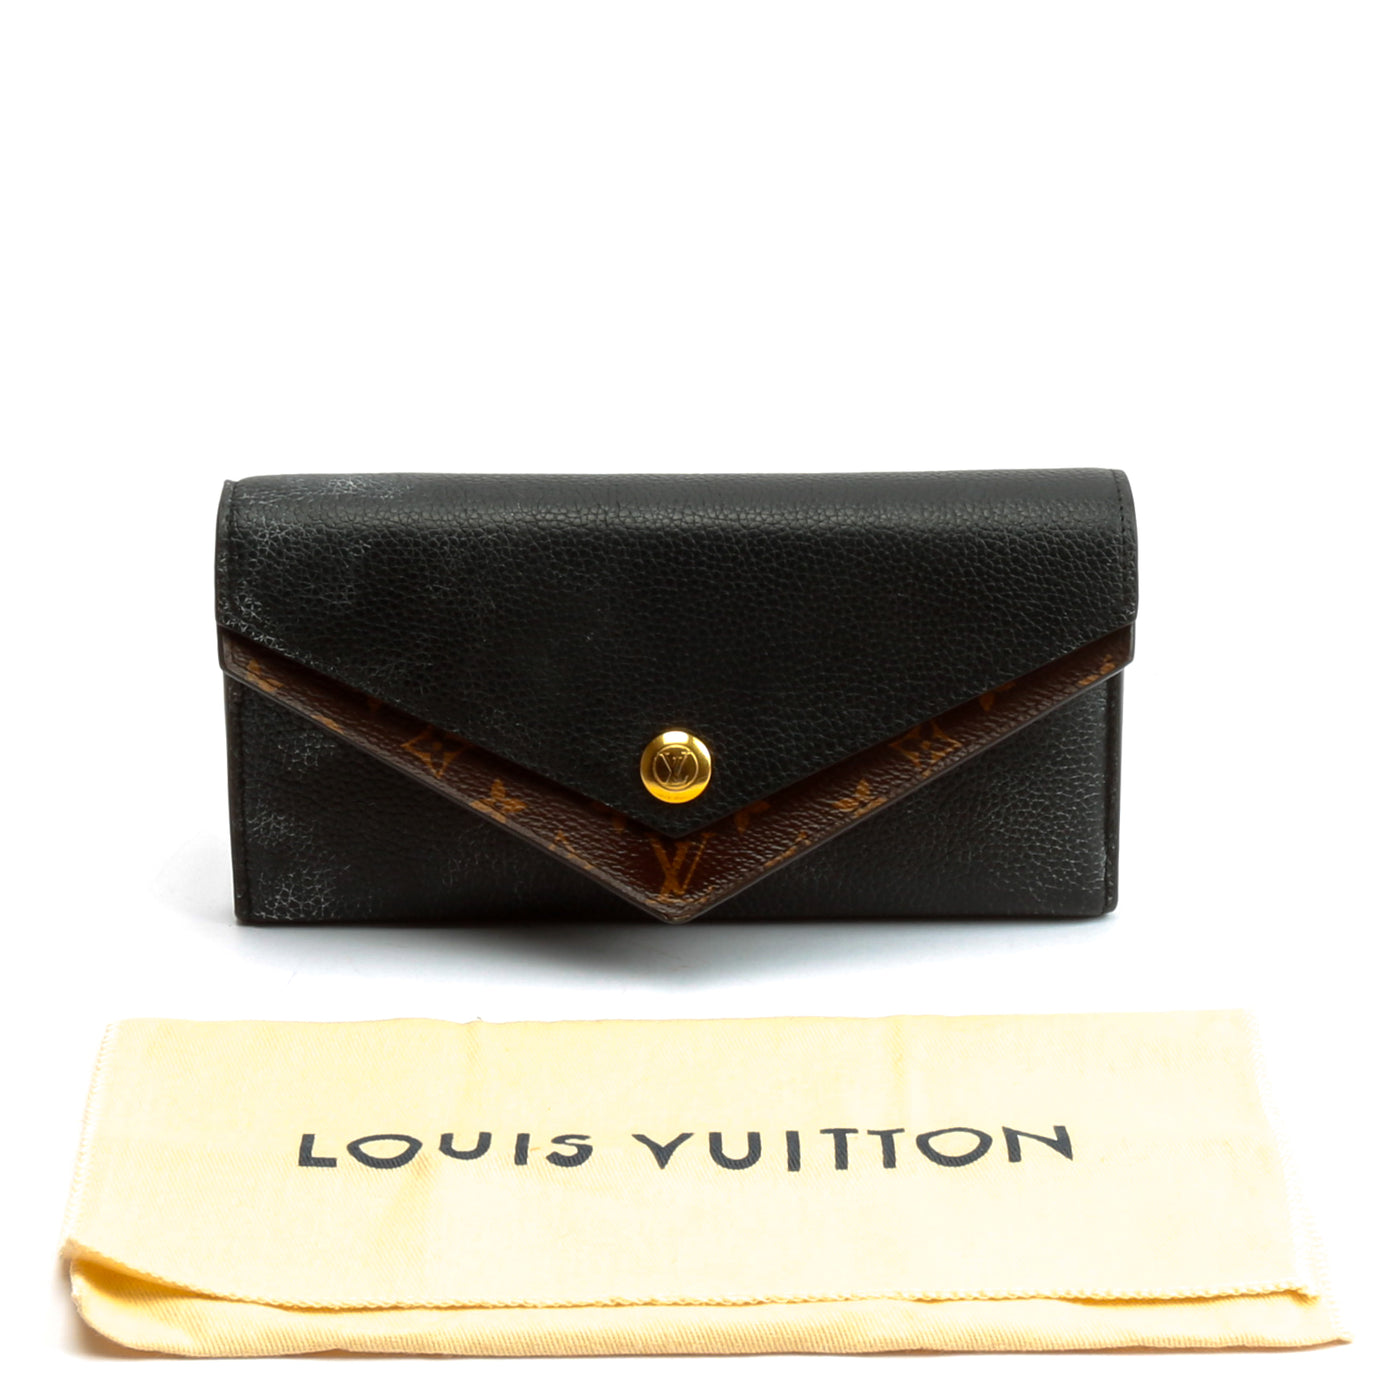 LOUIS VUITTON Calfskin Double V Wallet Black